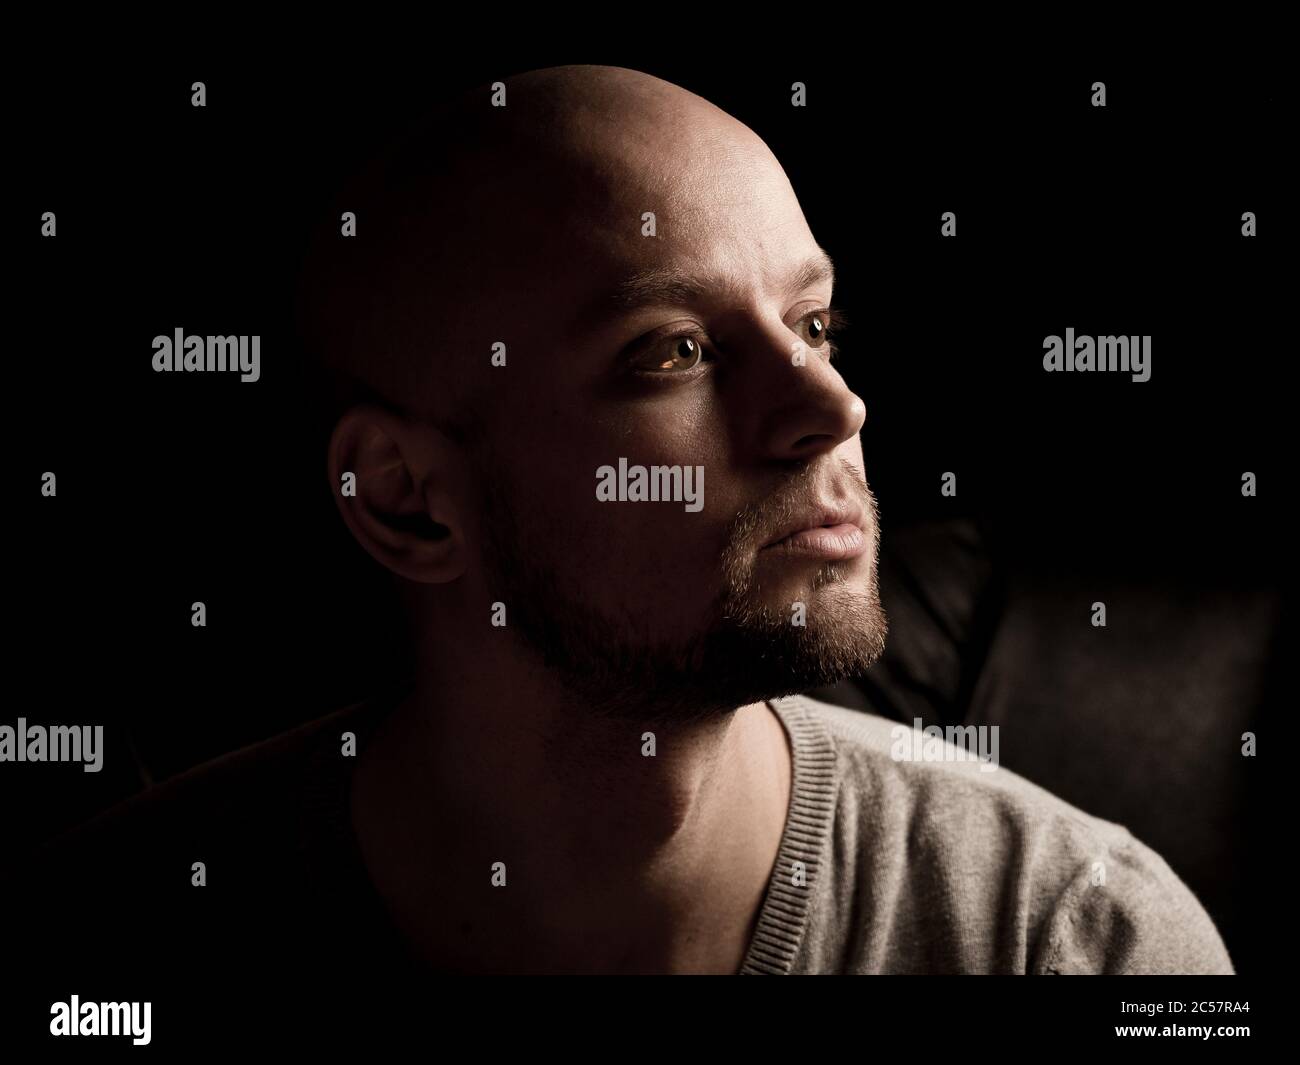 skinhead baldness shaved head man angry racist Stock Photo